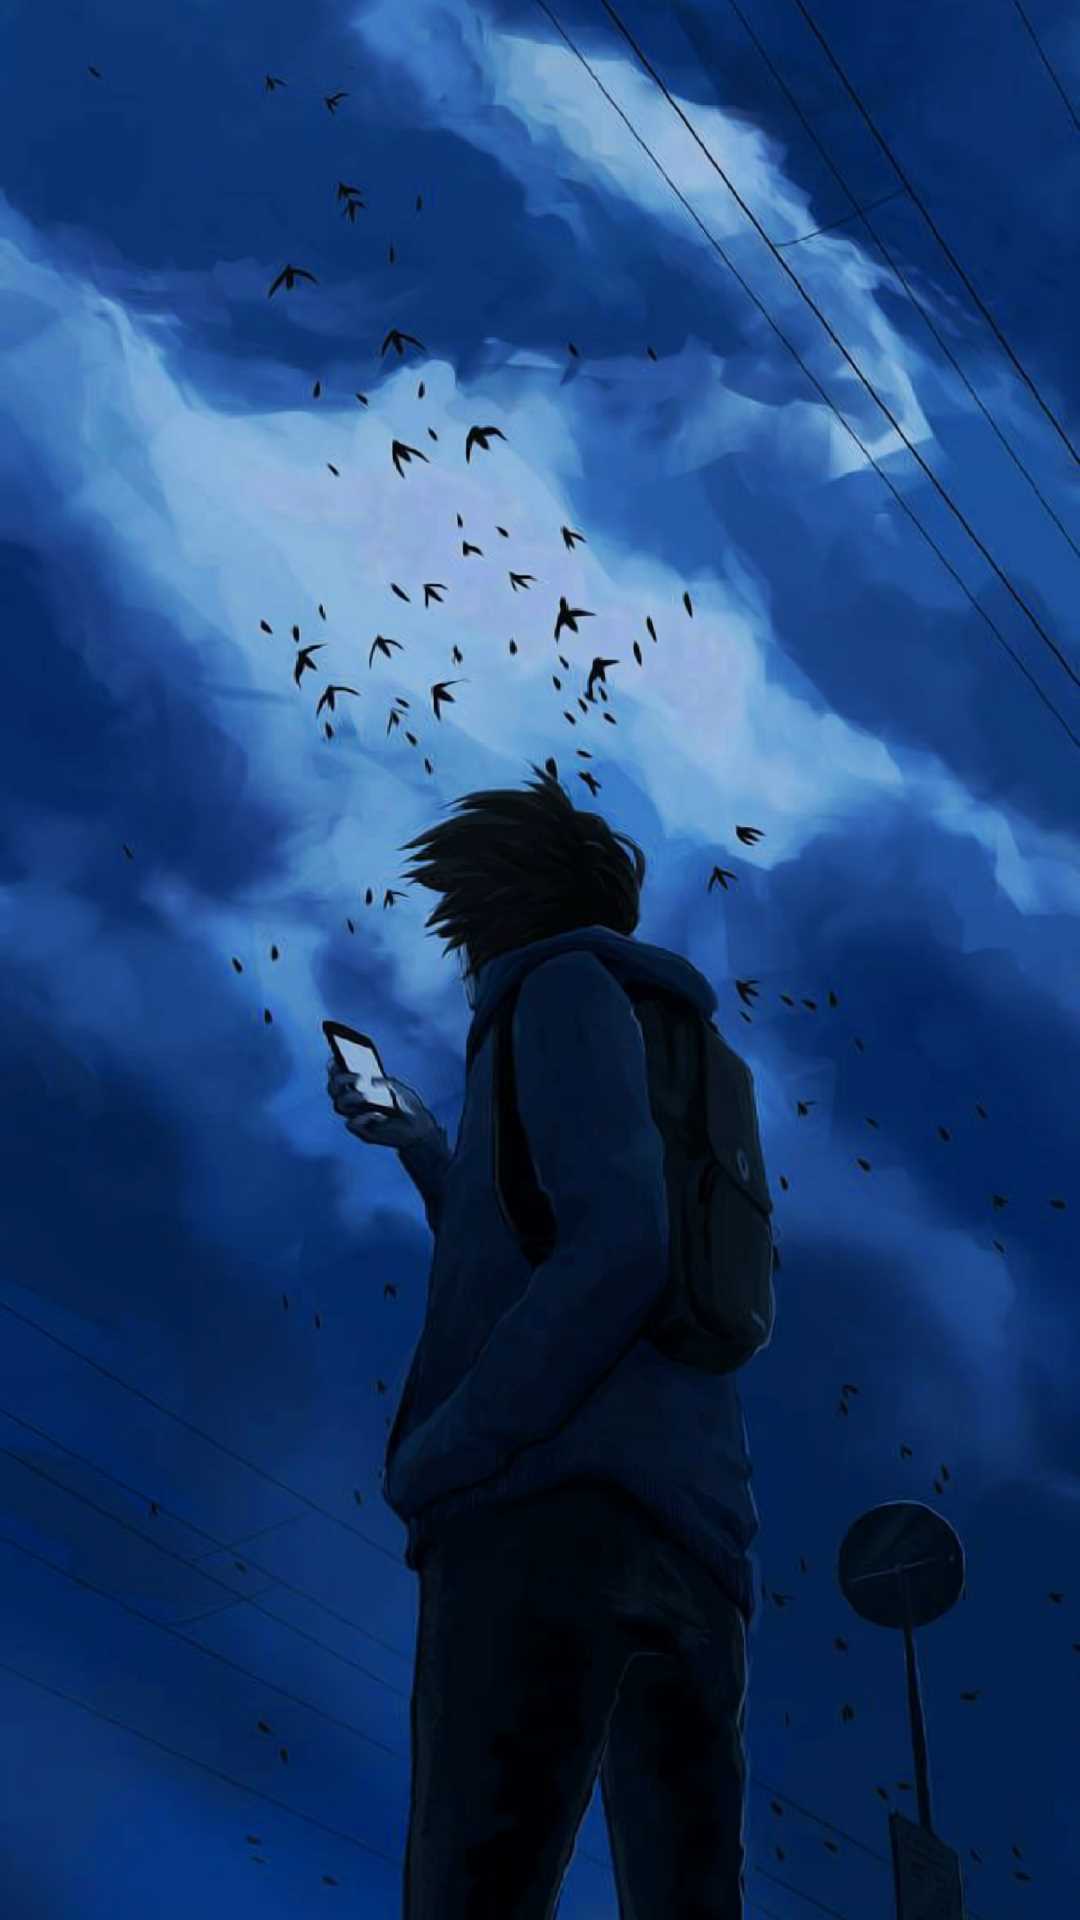 Anime Boy Alone Night Stars Scenery 4K Phone iPhone Wallpaper 824a